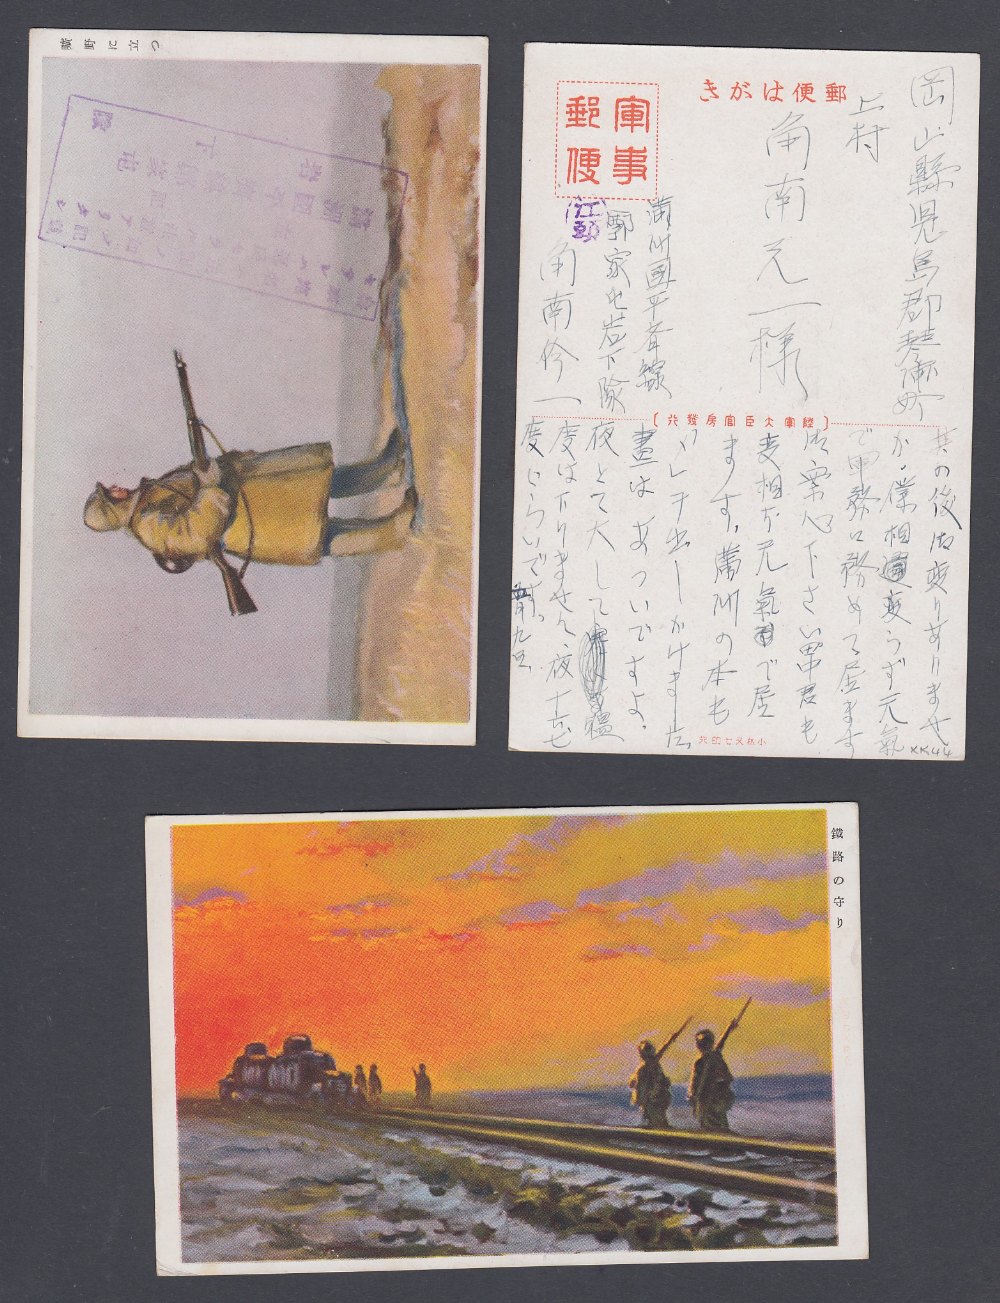 POSTAL HISTORY JAPAN, - Image 3 of 5